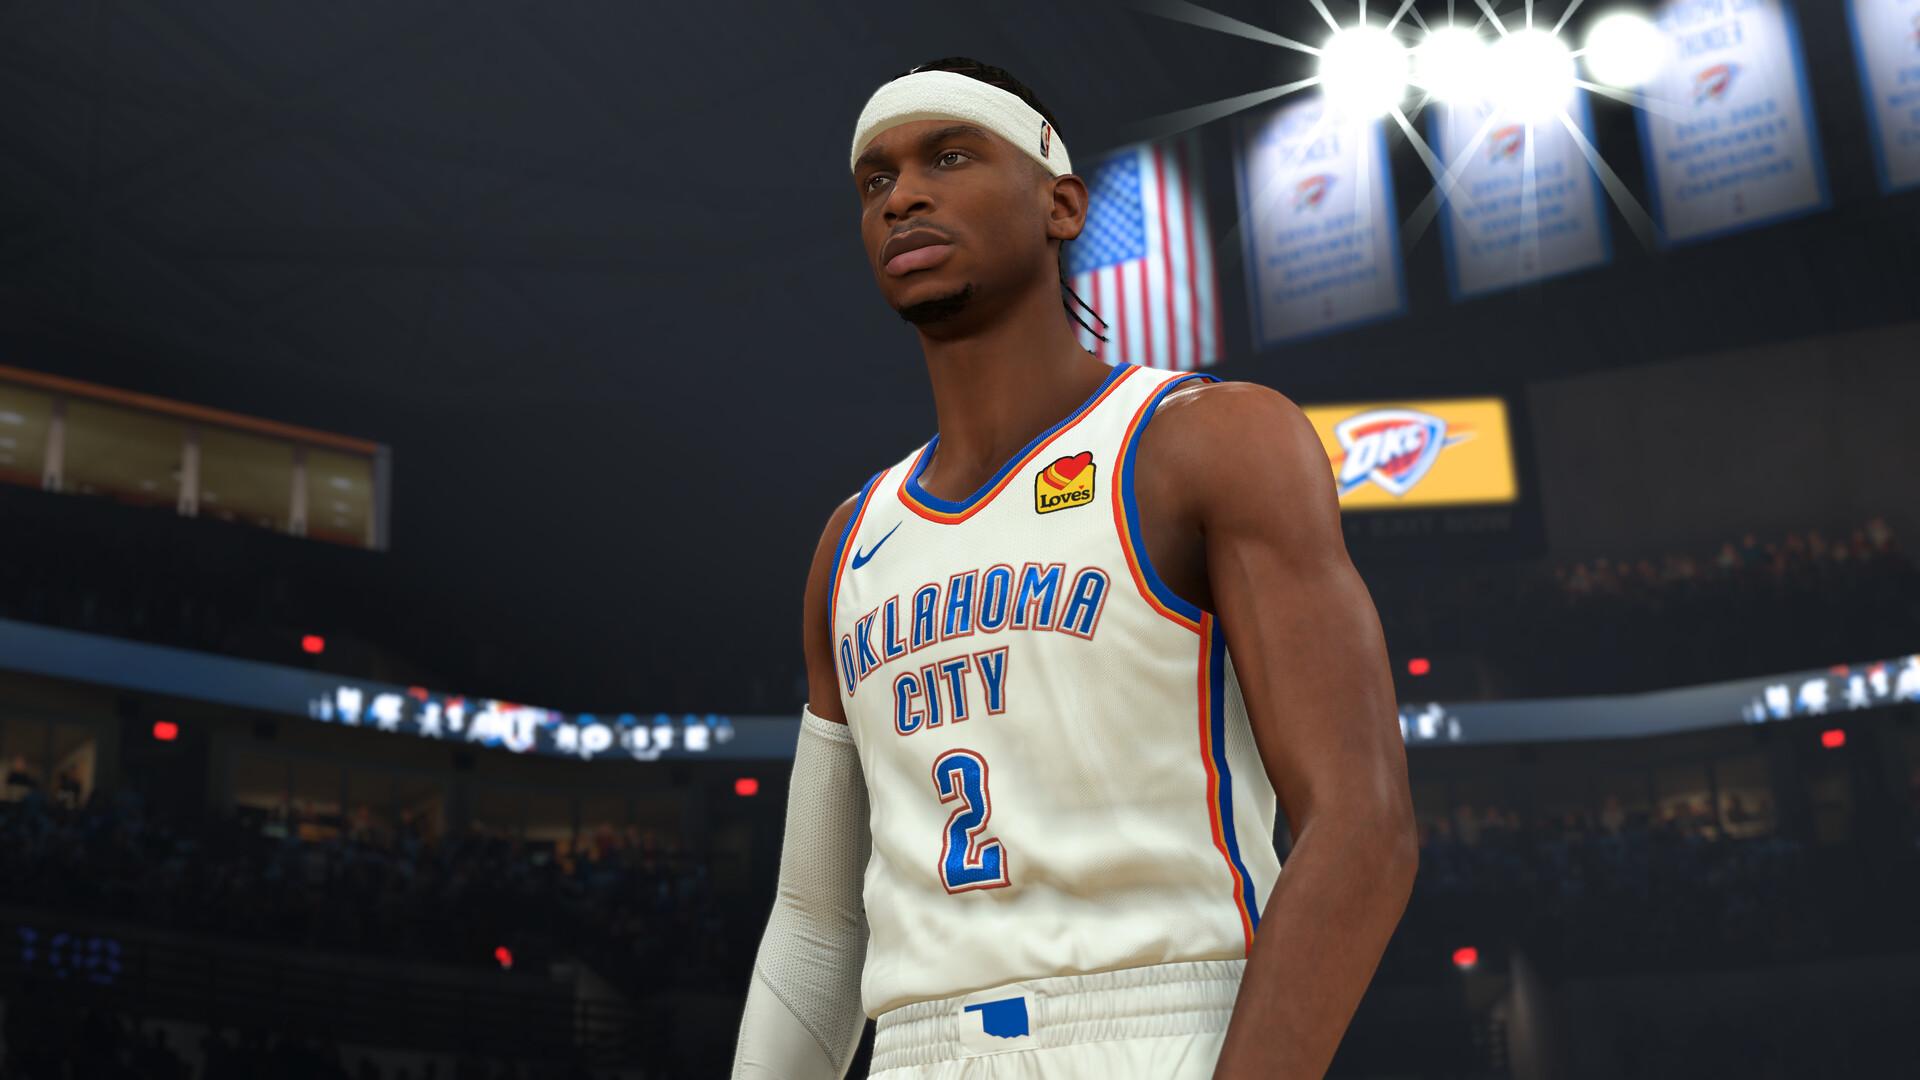 Screenshot №1 from game NBA 2K24